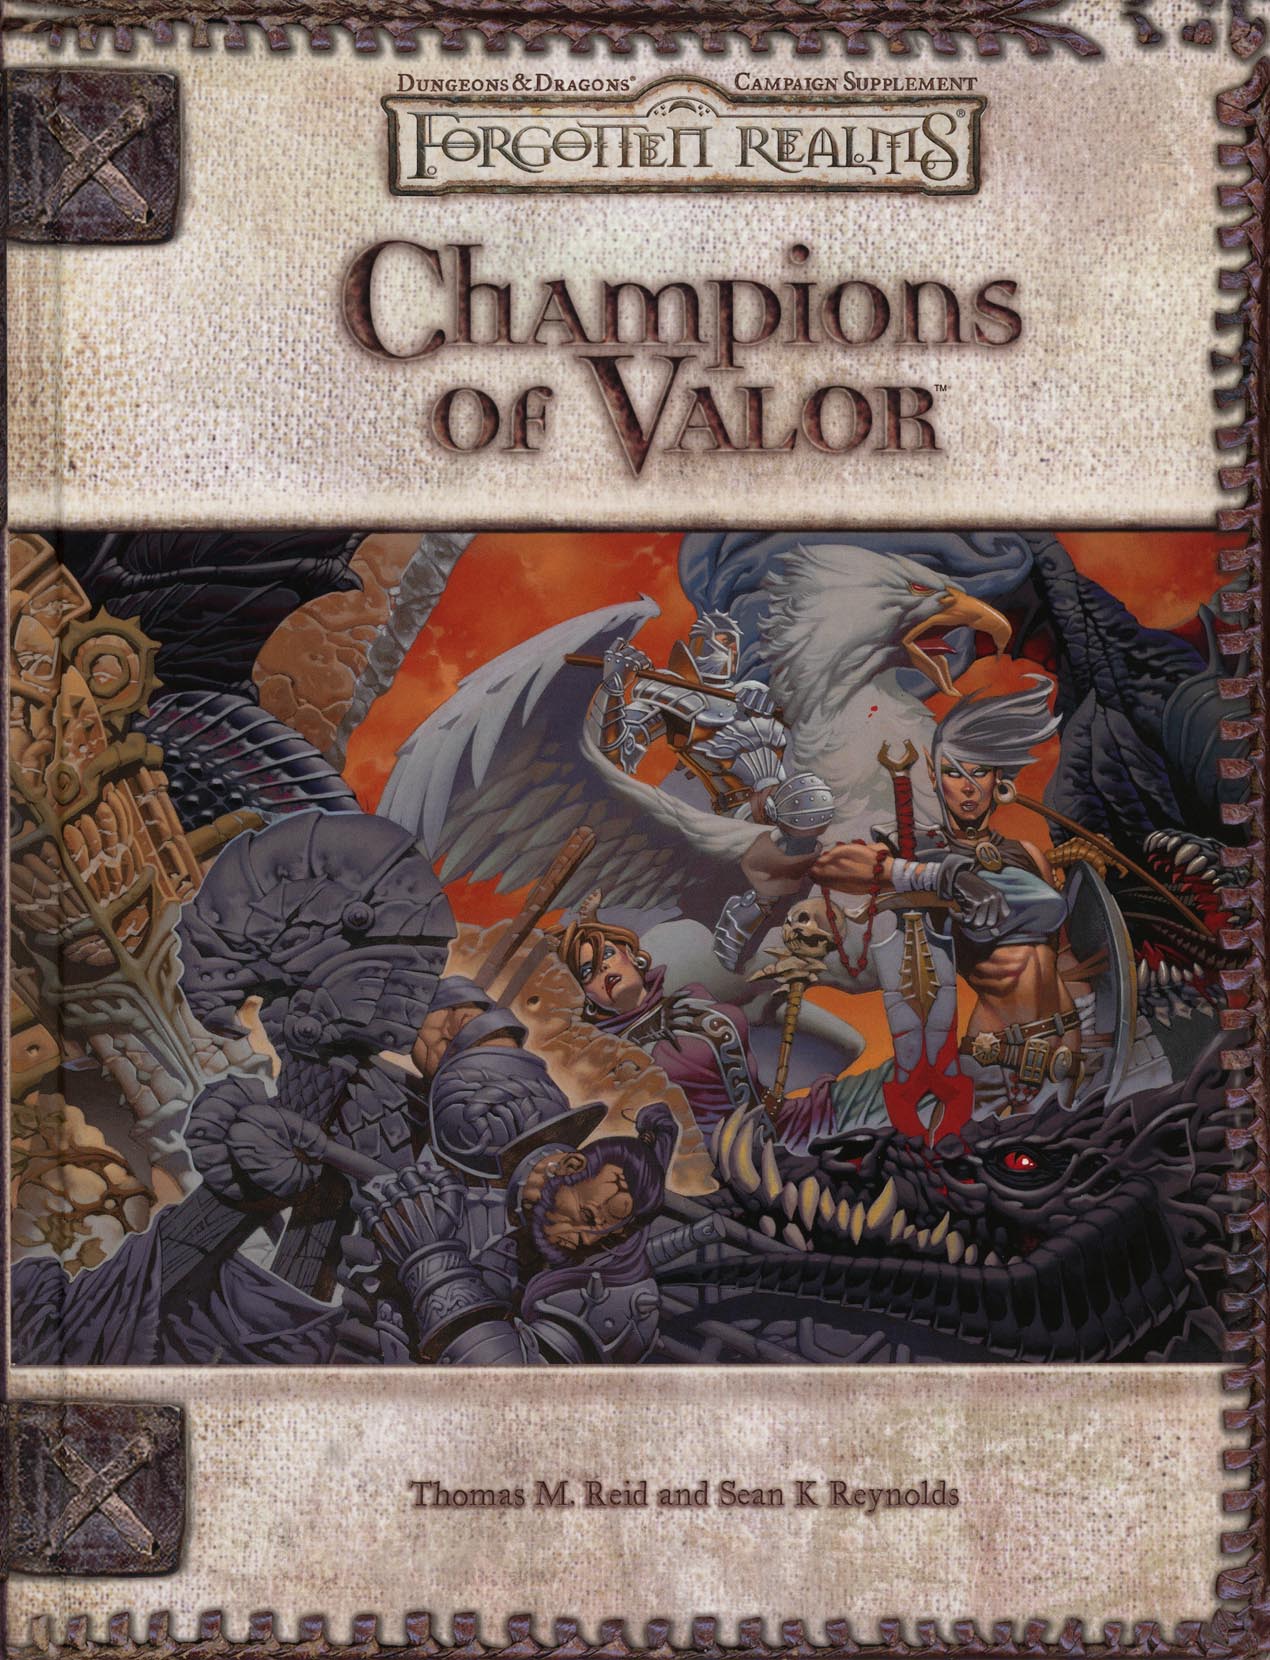 Claire bit Disciplinære Champions of Valor | Forgotten Realms Wiki | Fandom